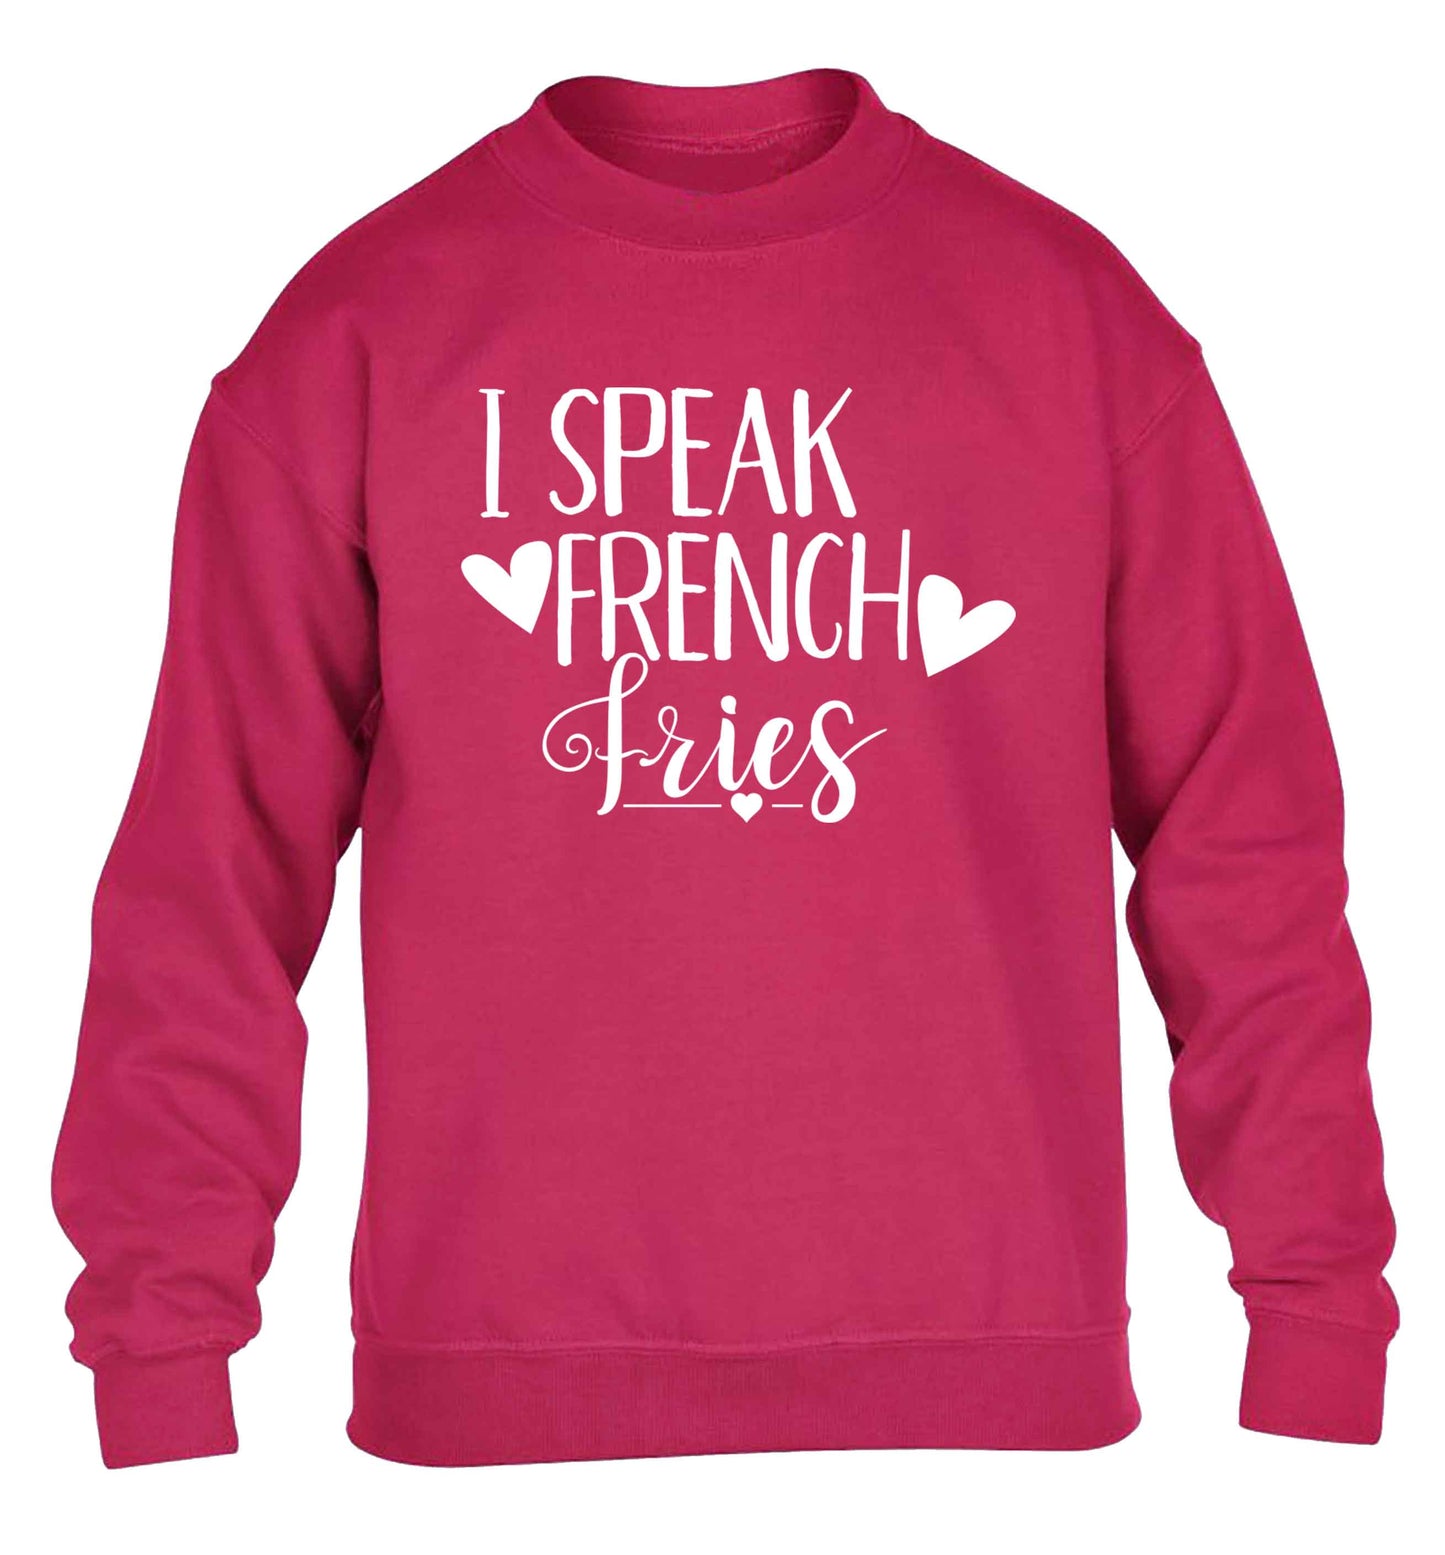 I speak French fries children's pink sweater 12-13 Years